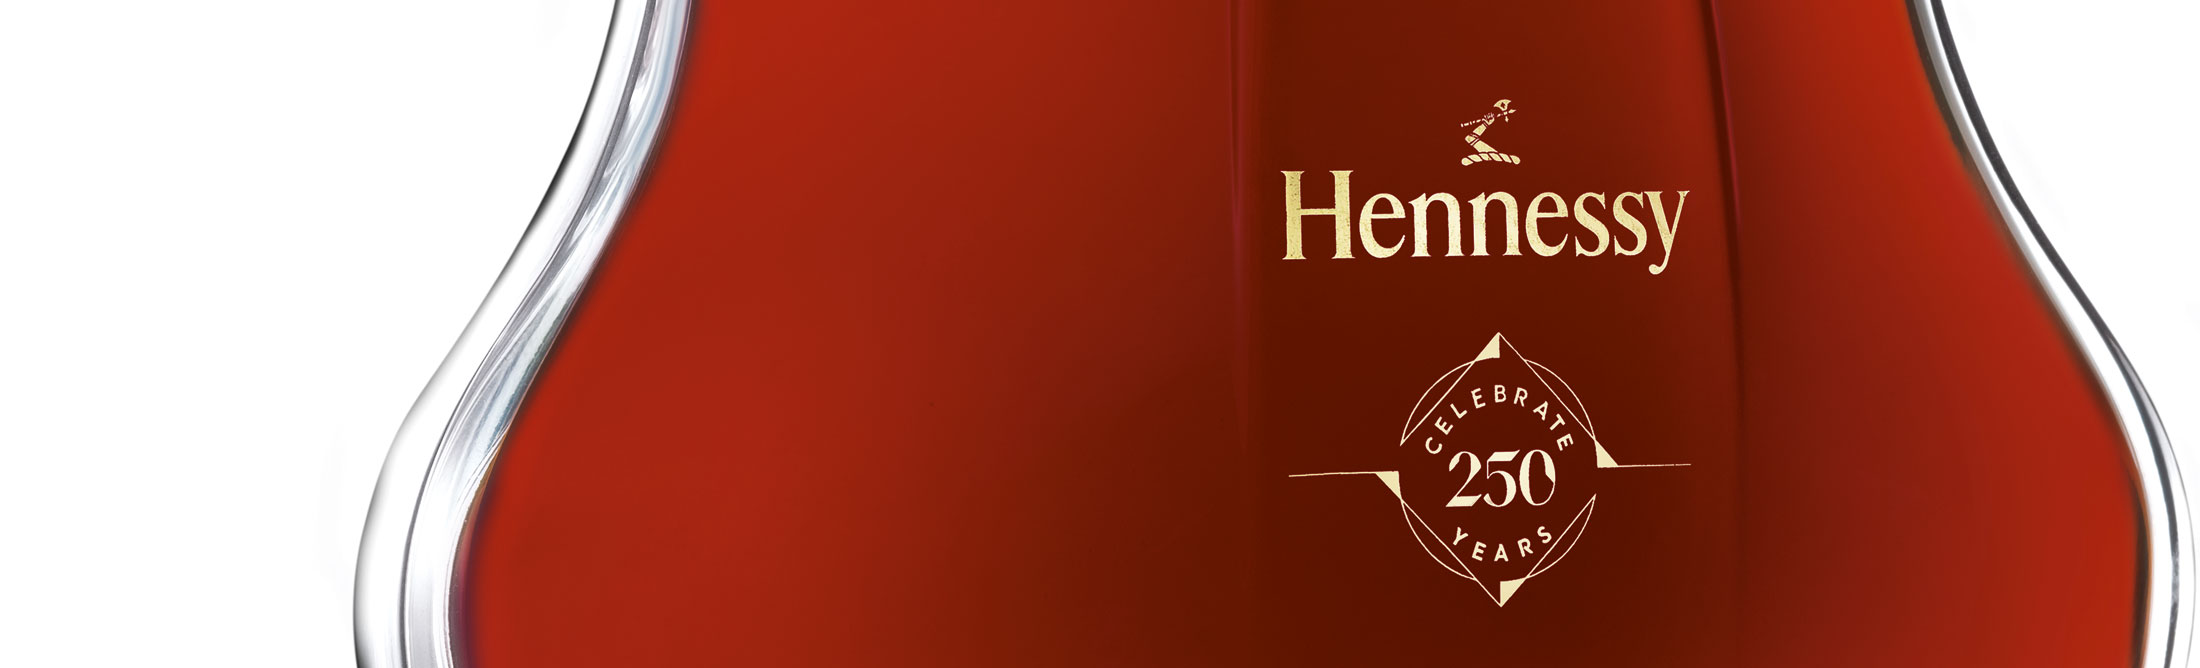 Hennessy 250th Anniv. – Bourbon Wine & Spirits